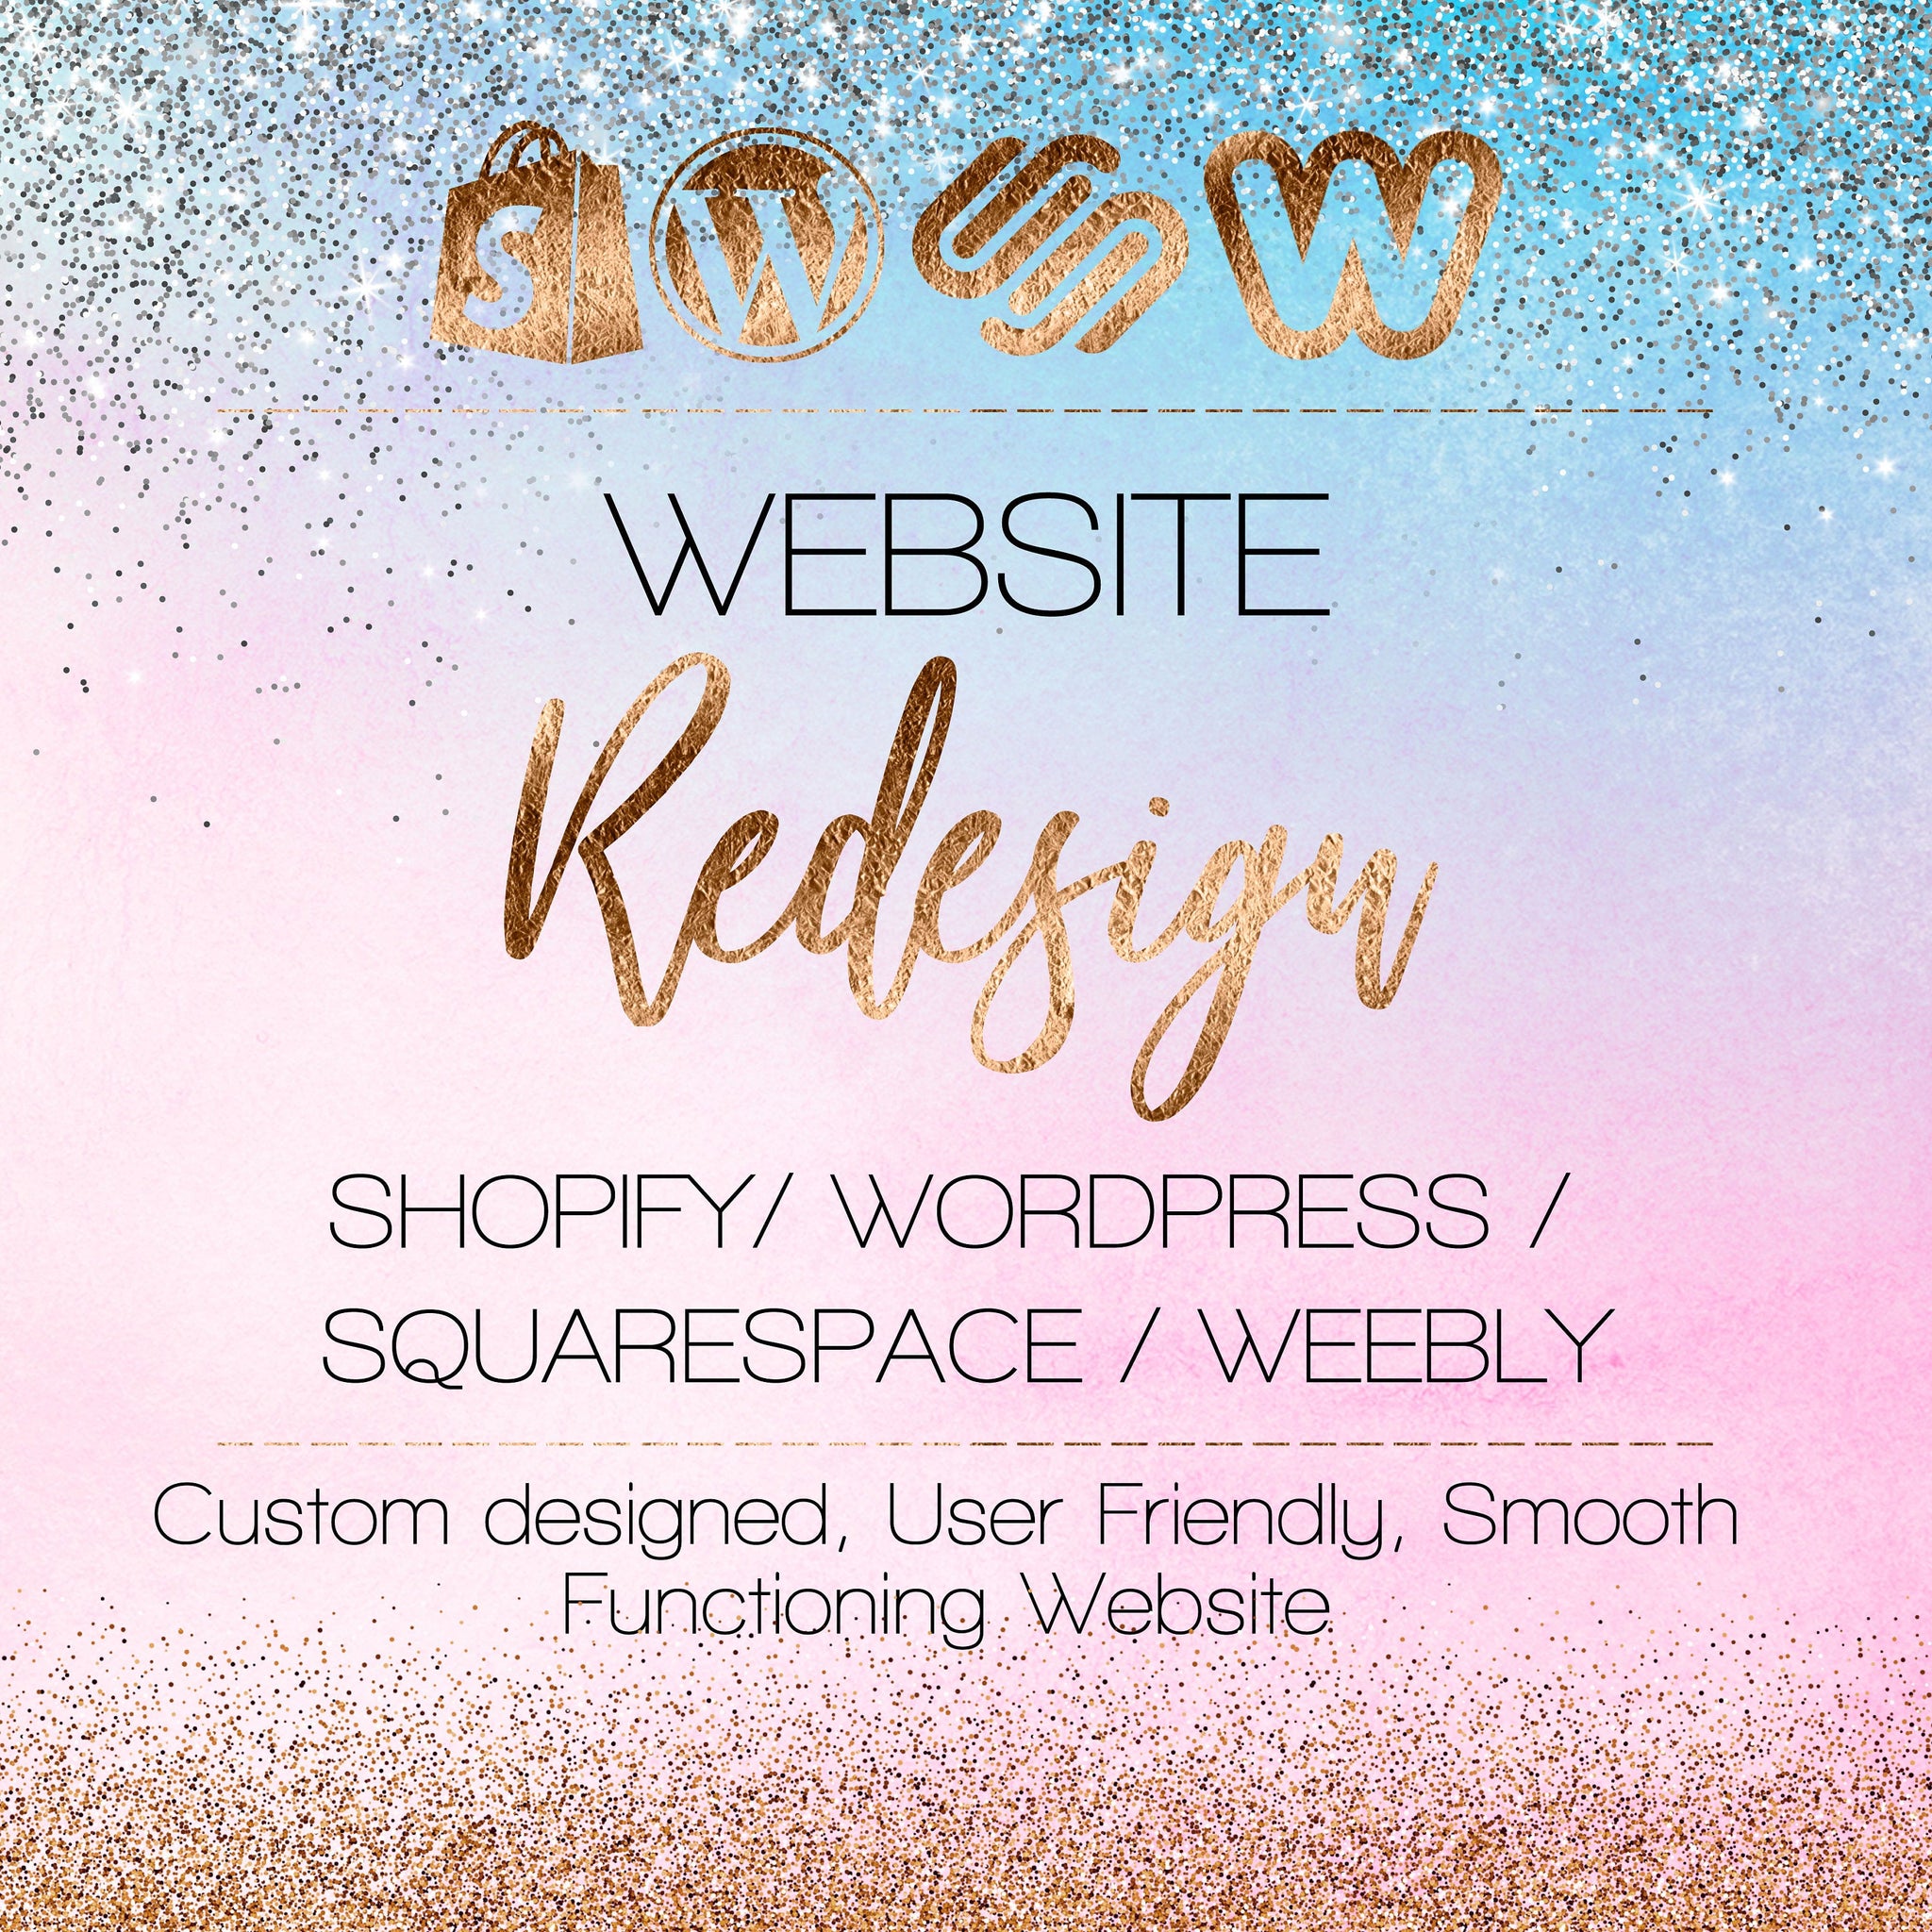 Custom Website Redesign – Blog Website Redesign - Photography Website - Portfolio website - Events website – Business Website – E-commerce